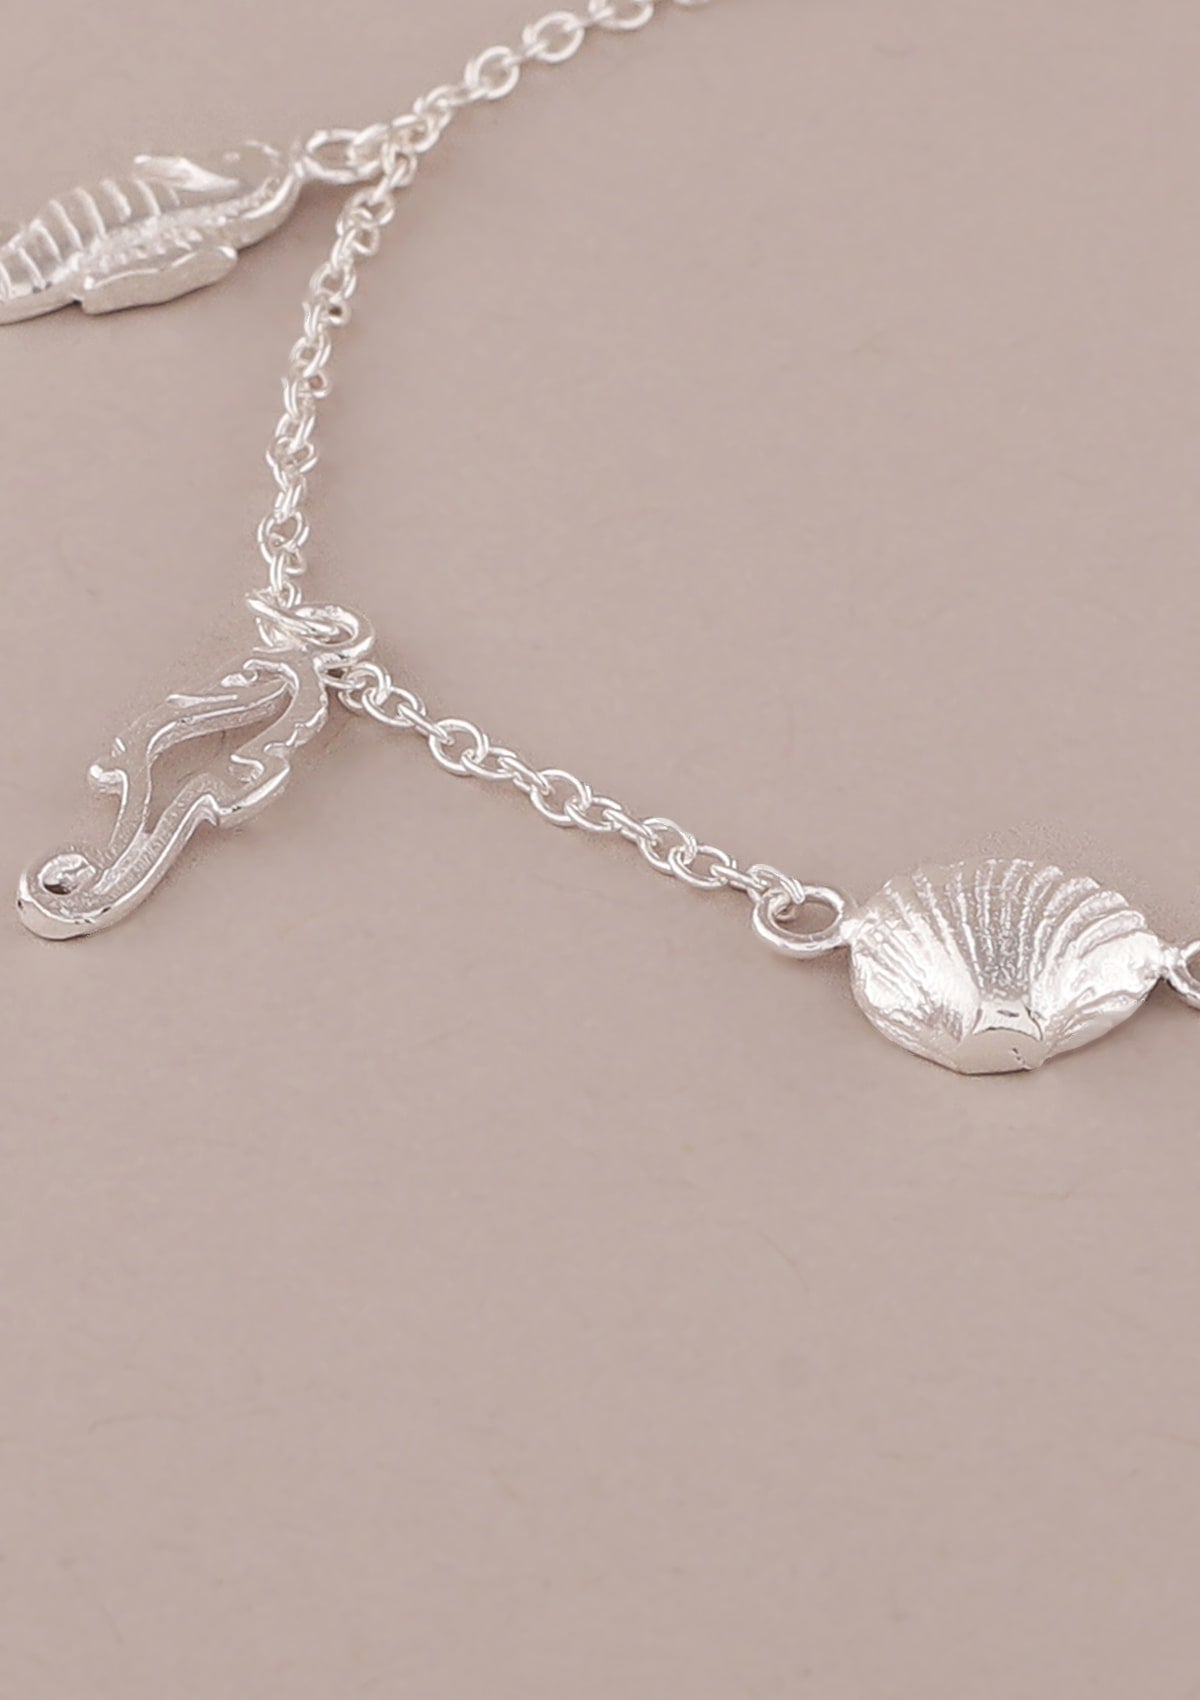 Silver Ocean Charm Bracelet - IshqMe